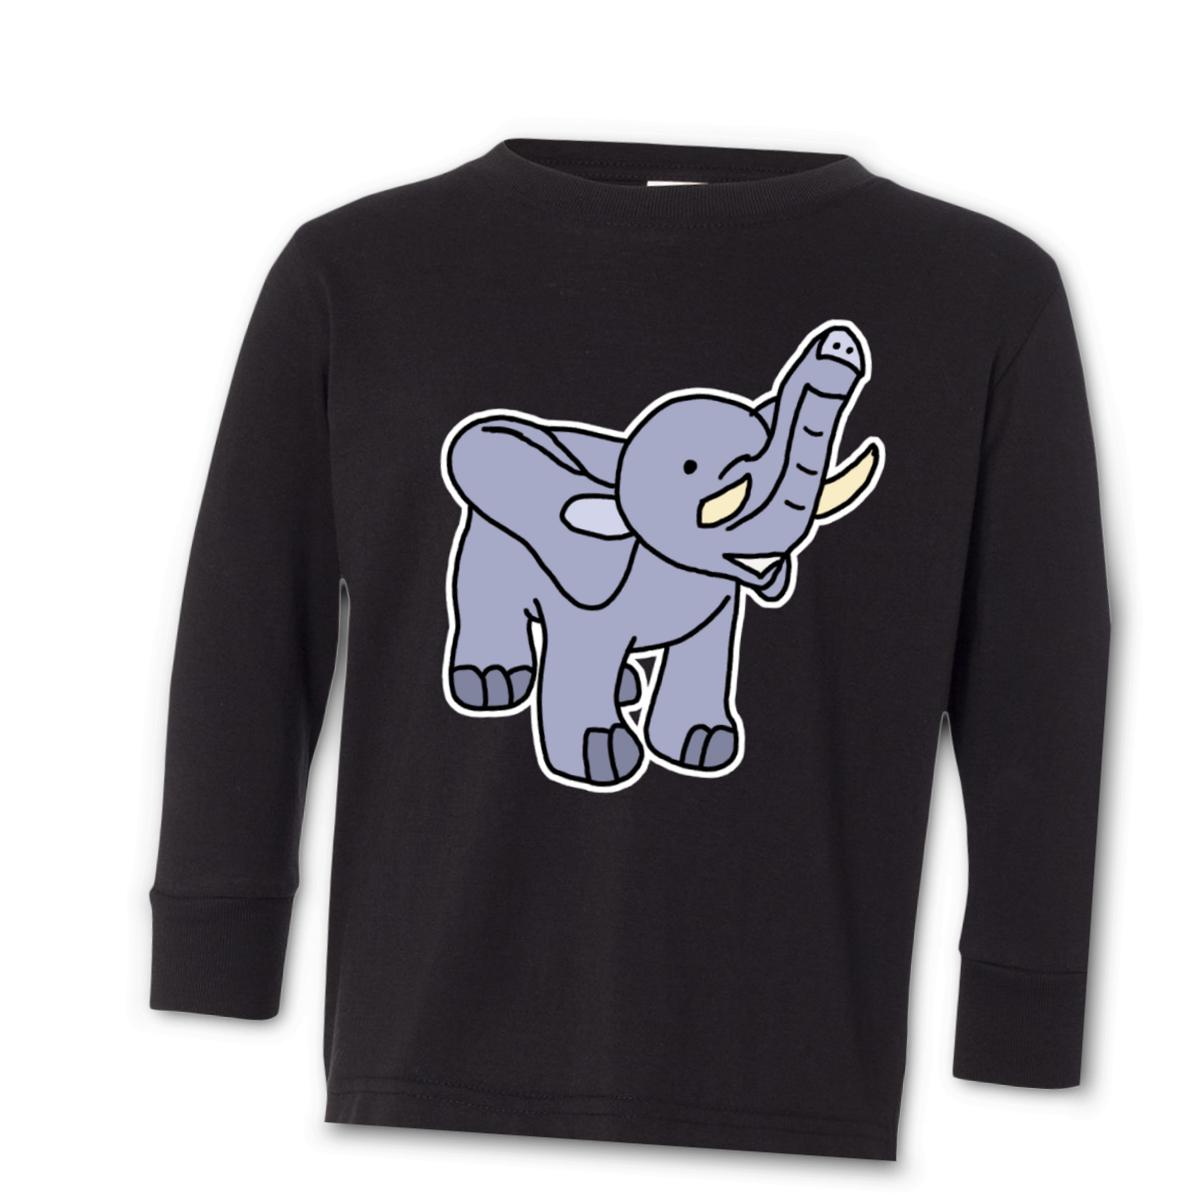 Toy Elephant Toddler Long Sleeve Tee 56T black